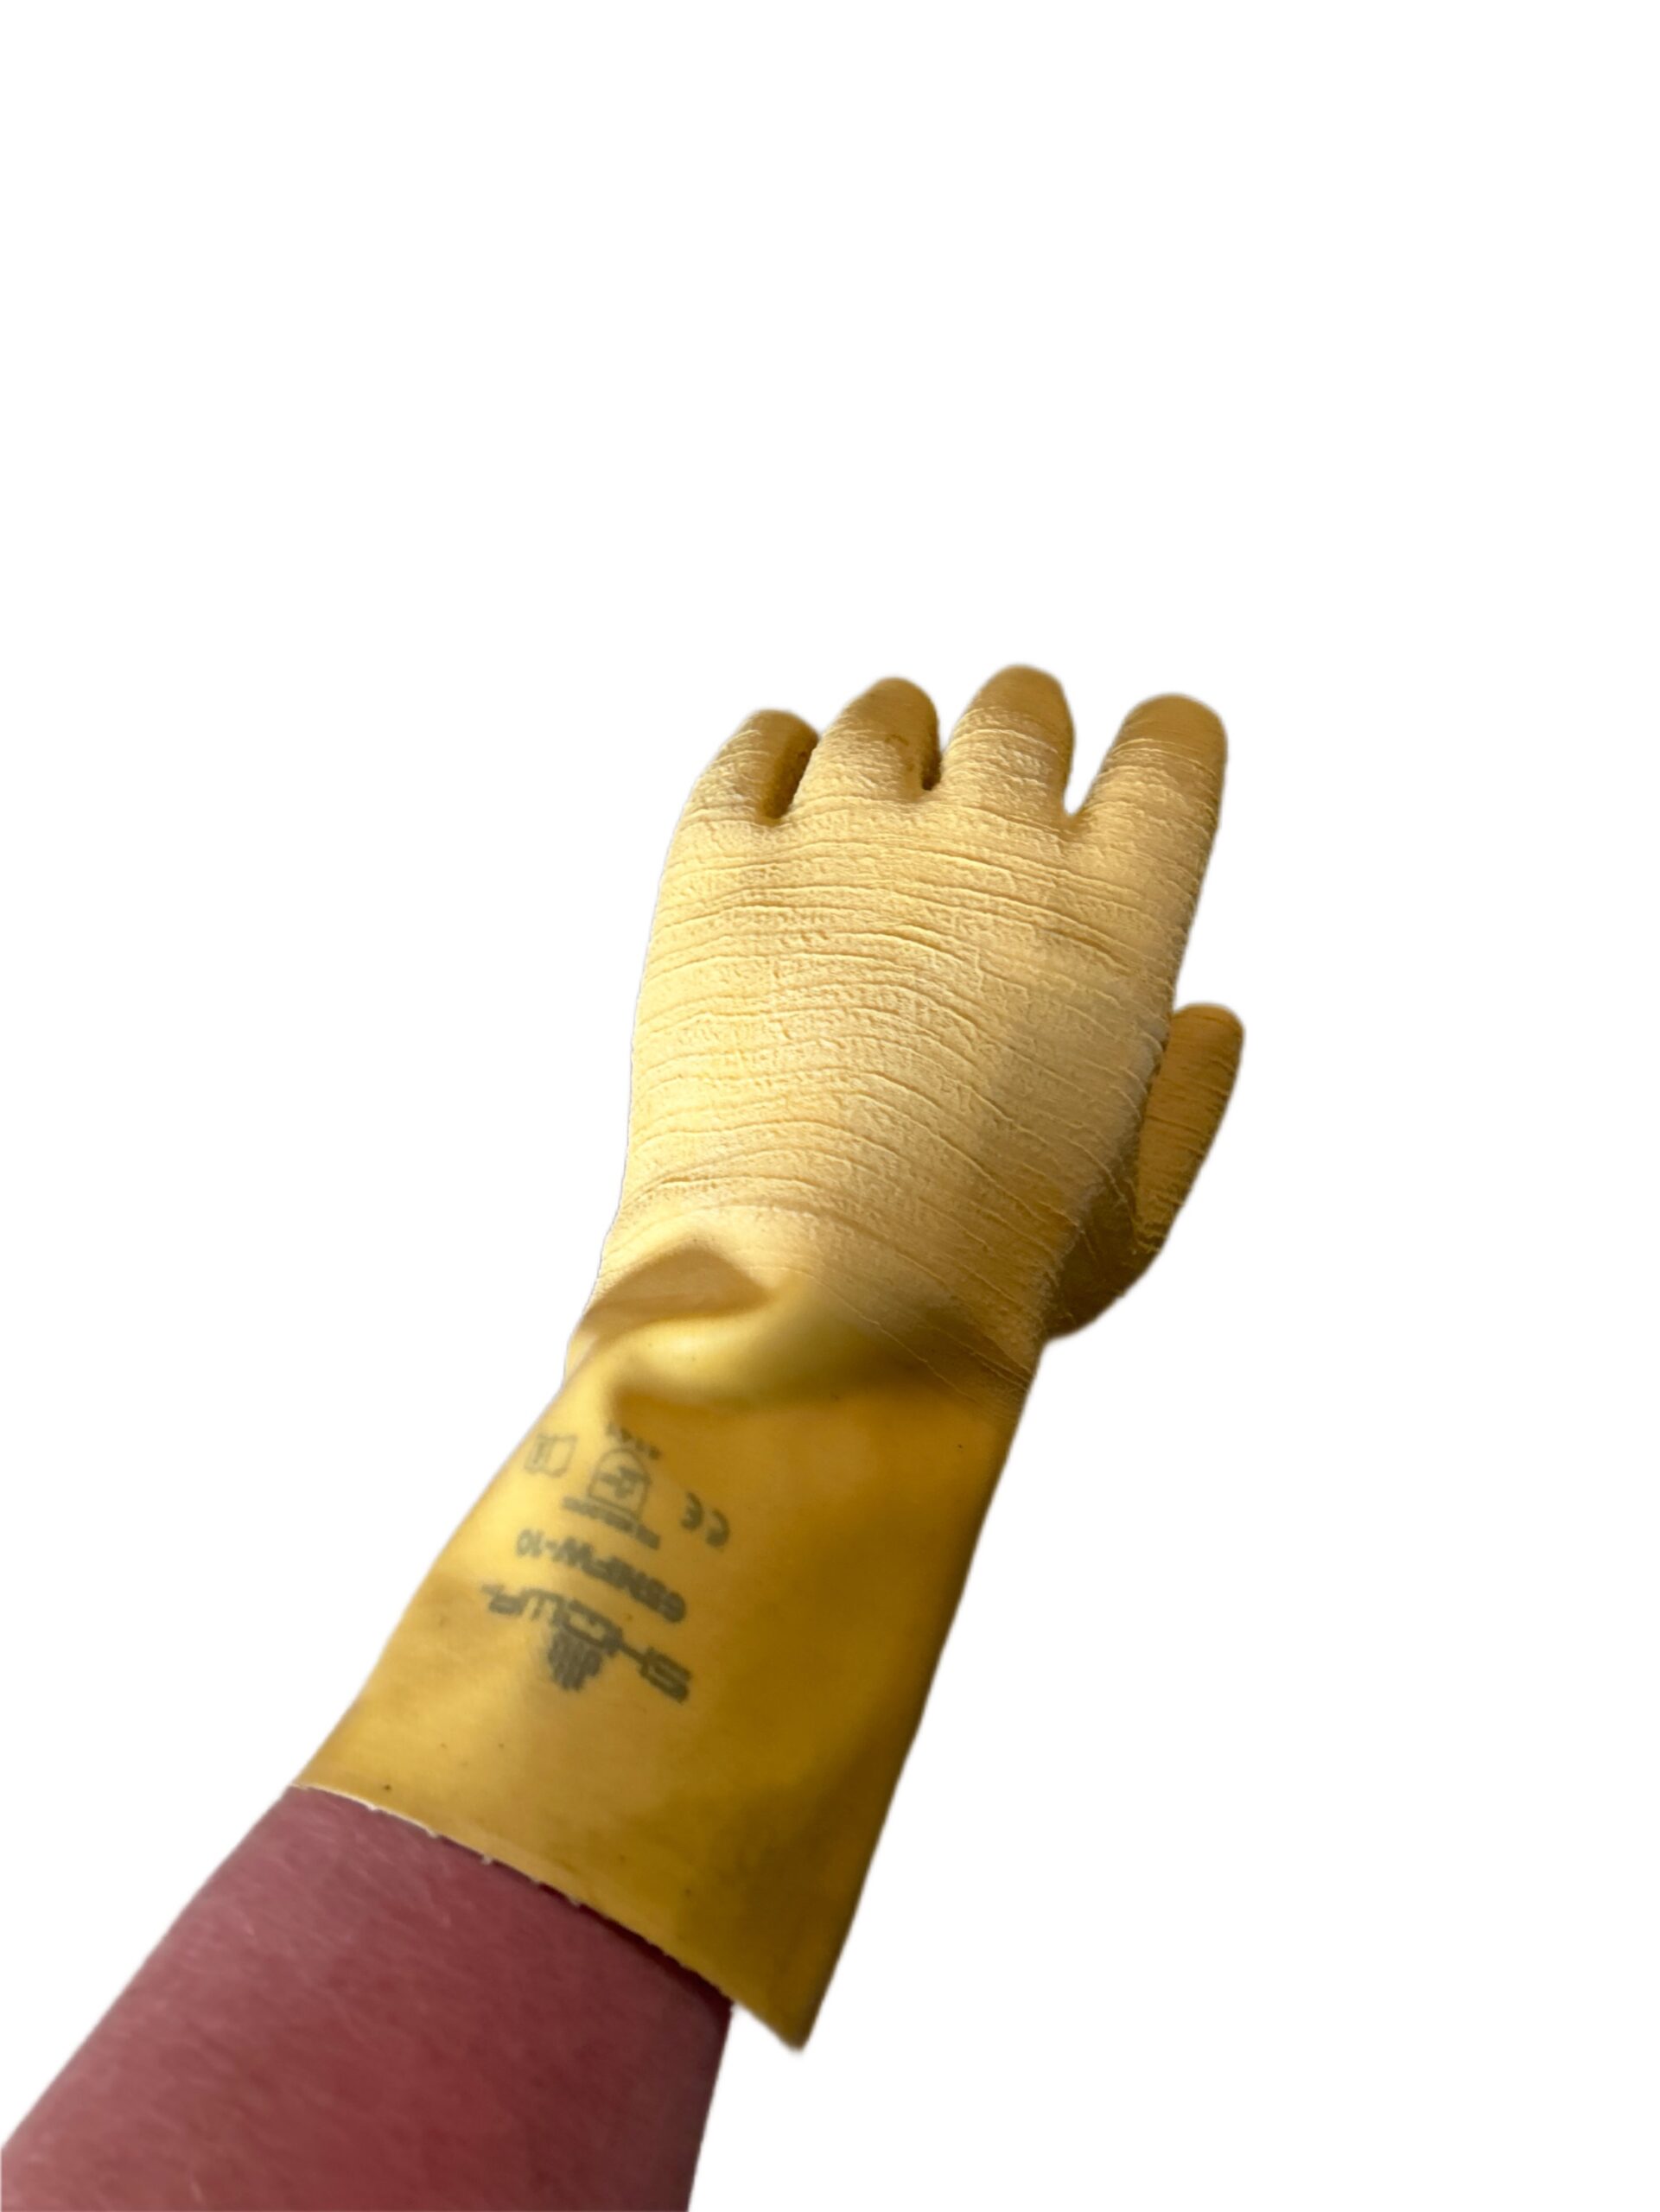 Culling Gloves Commercial Grade